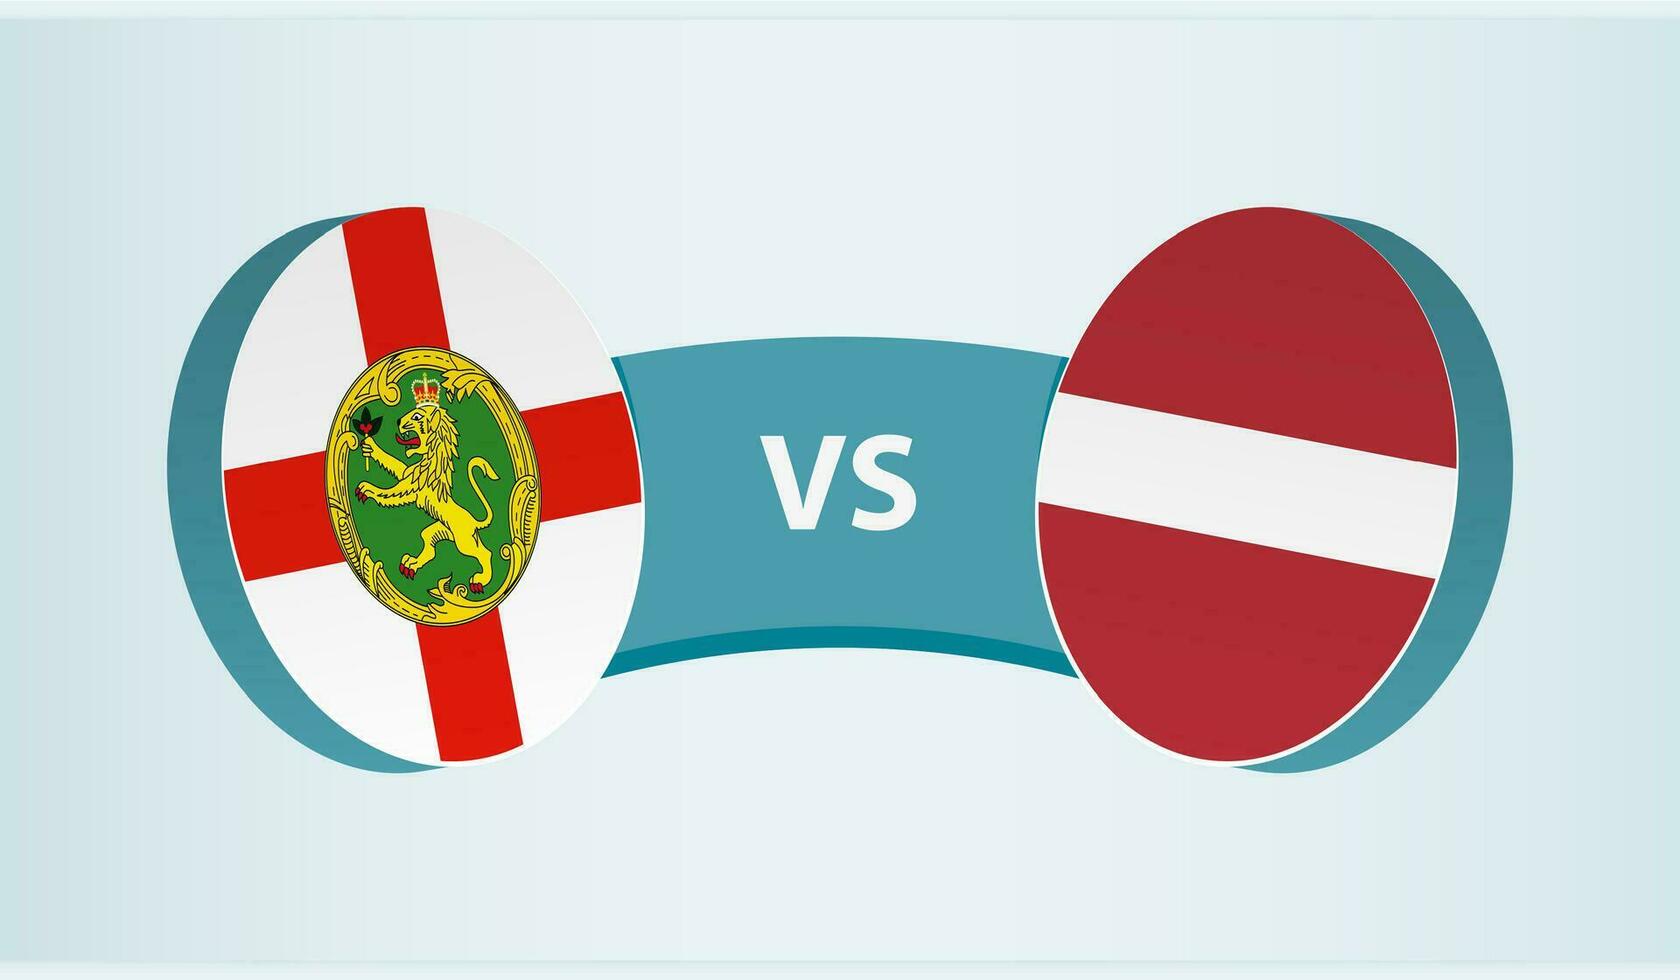 alderney versus Letland, team sport- wedstrijd concept. vector